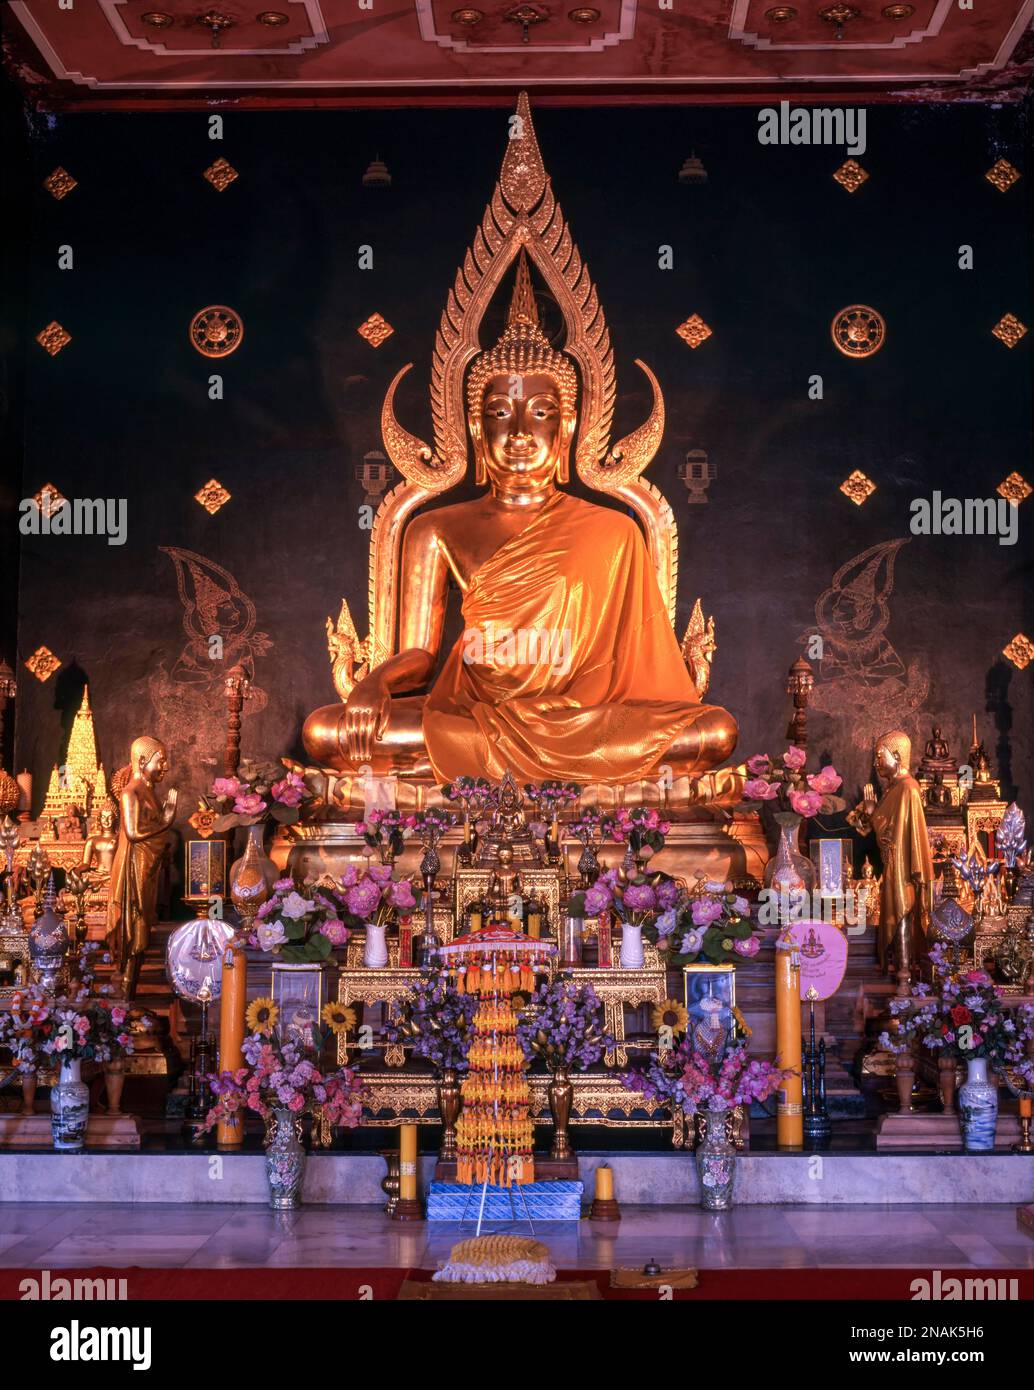 Statue of Lord Buddha in Thai Temple at Bodhgaya, Bihar, India Stock Photo